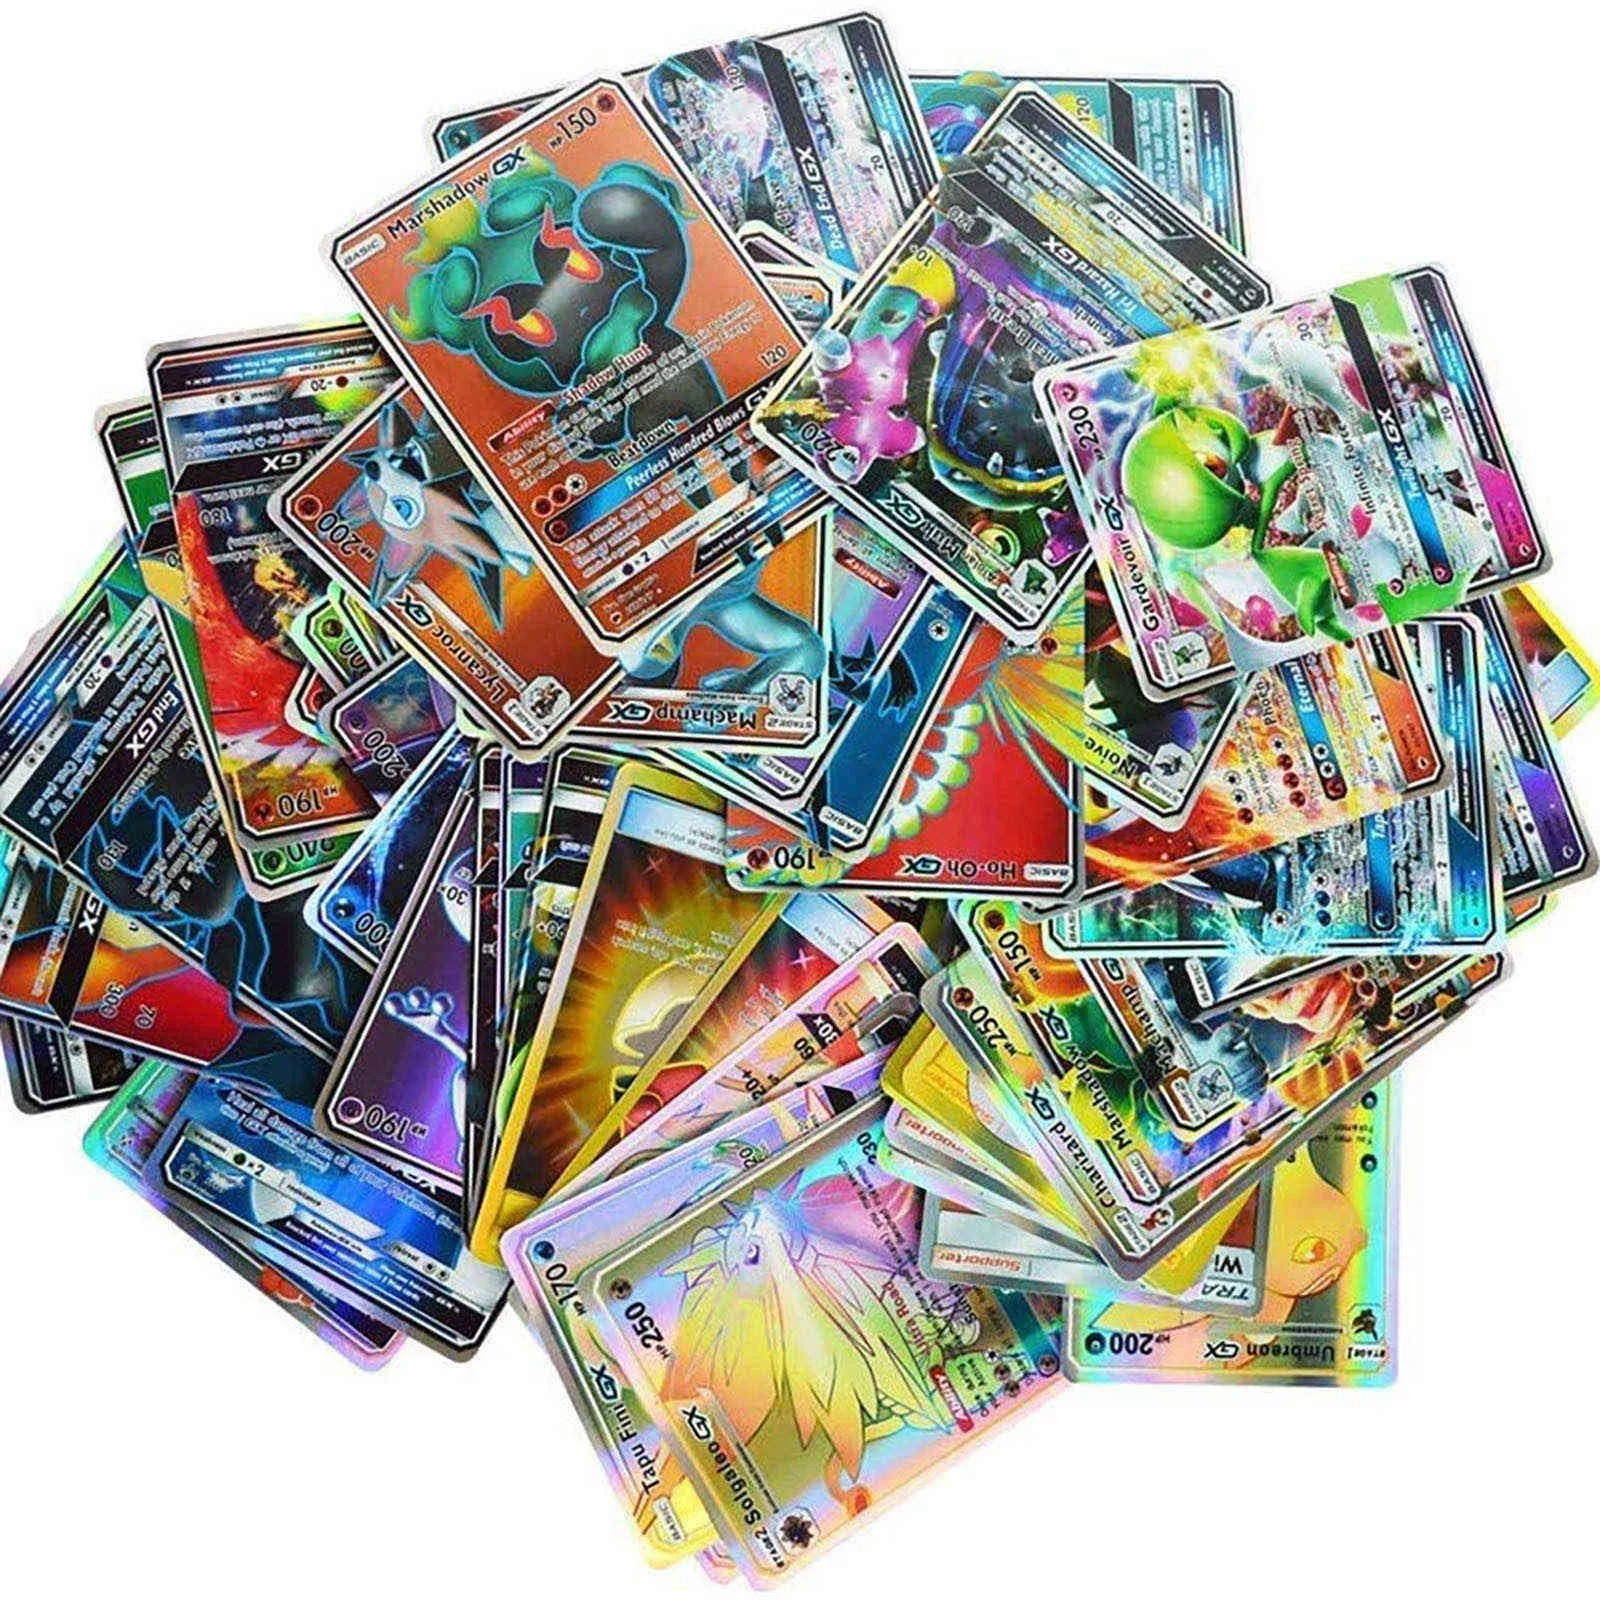 60st Complete GX French Version Cards Paket 60 Kompletta mega kort, leksakskort, barnkort Boite de Games Toys Card Set Cartoon G1125